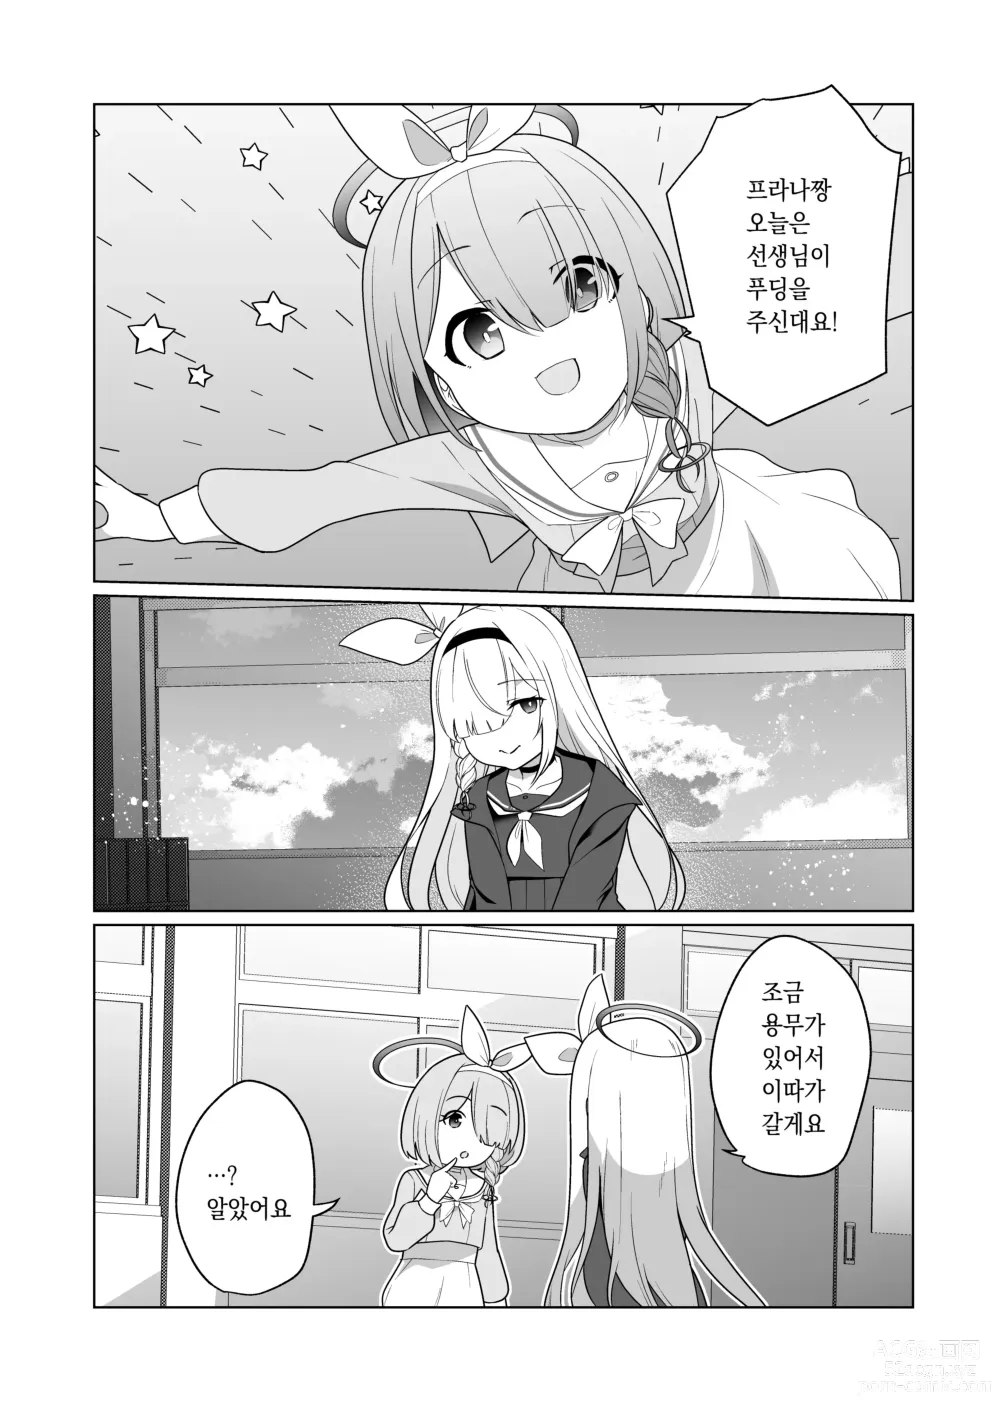 Page 33 of doujinshi 싫어하는 프라나가 기꺼이 봉사하는 이야기